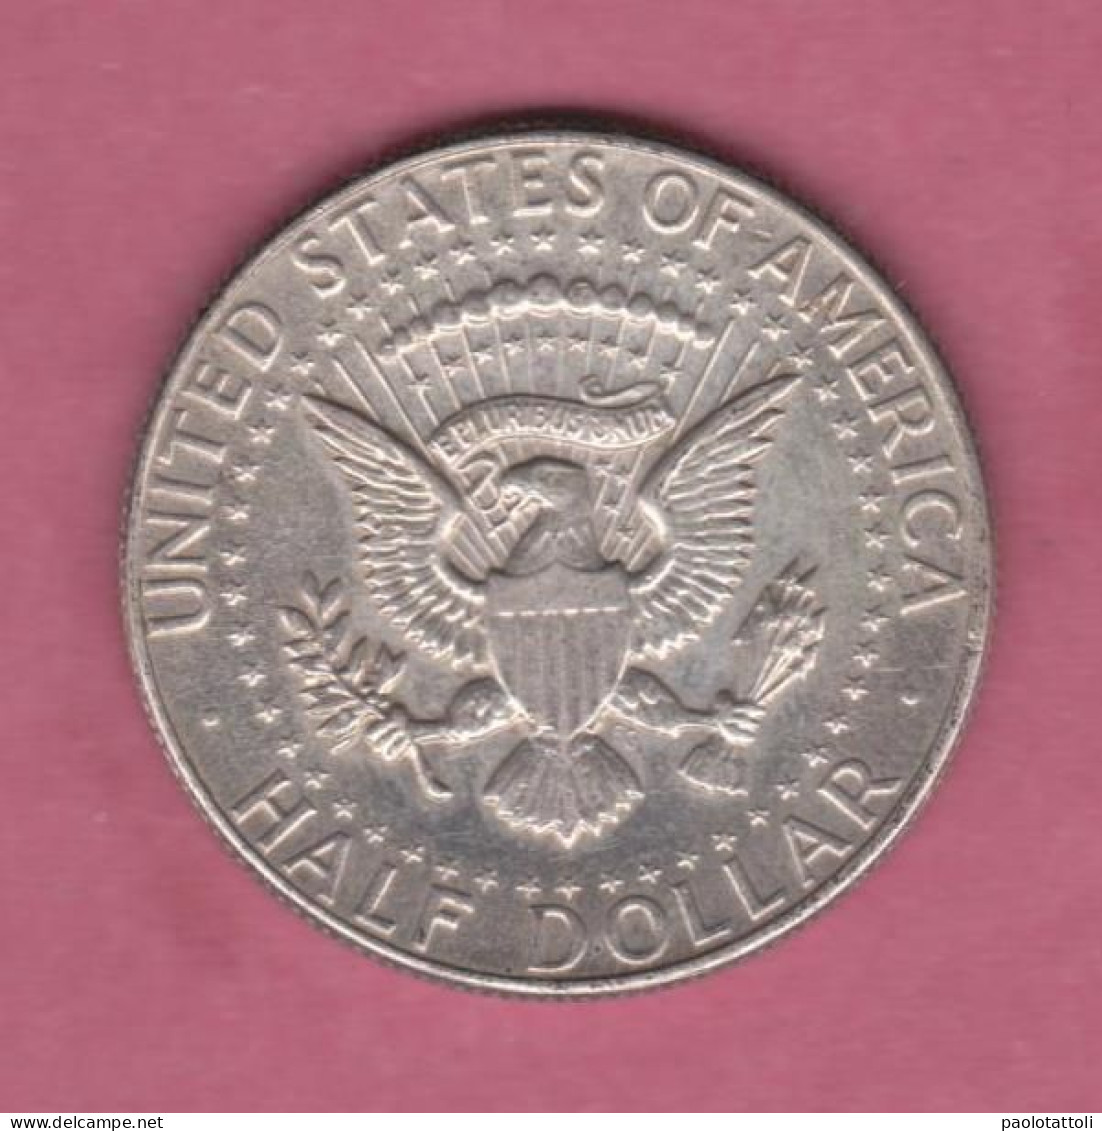 USA, 1964- Half Dollar- 90% Silver- Obverse Portrait Of John F. Kennedy. - Commemoratives